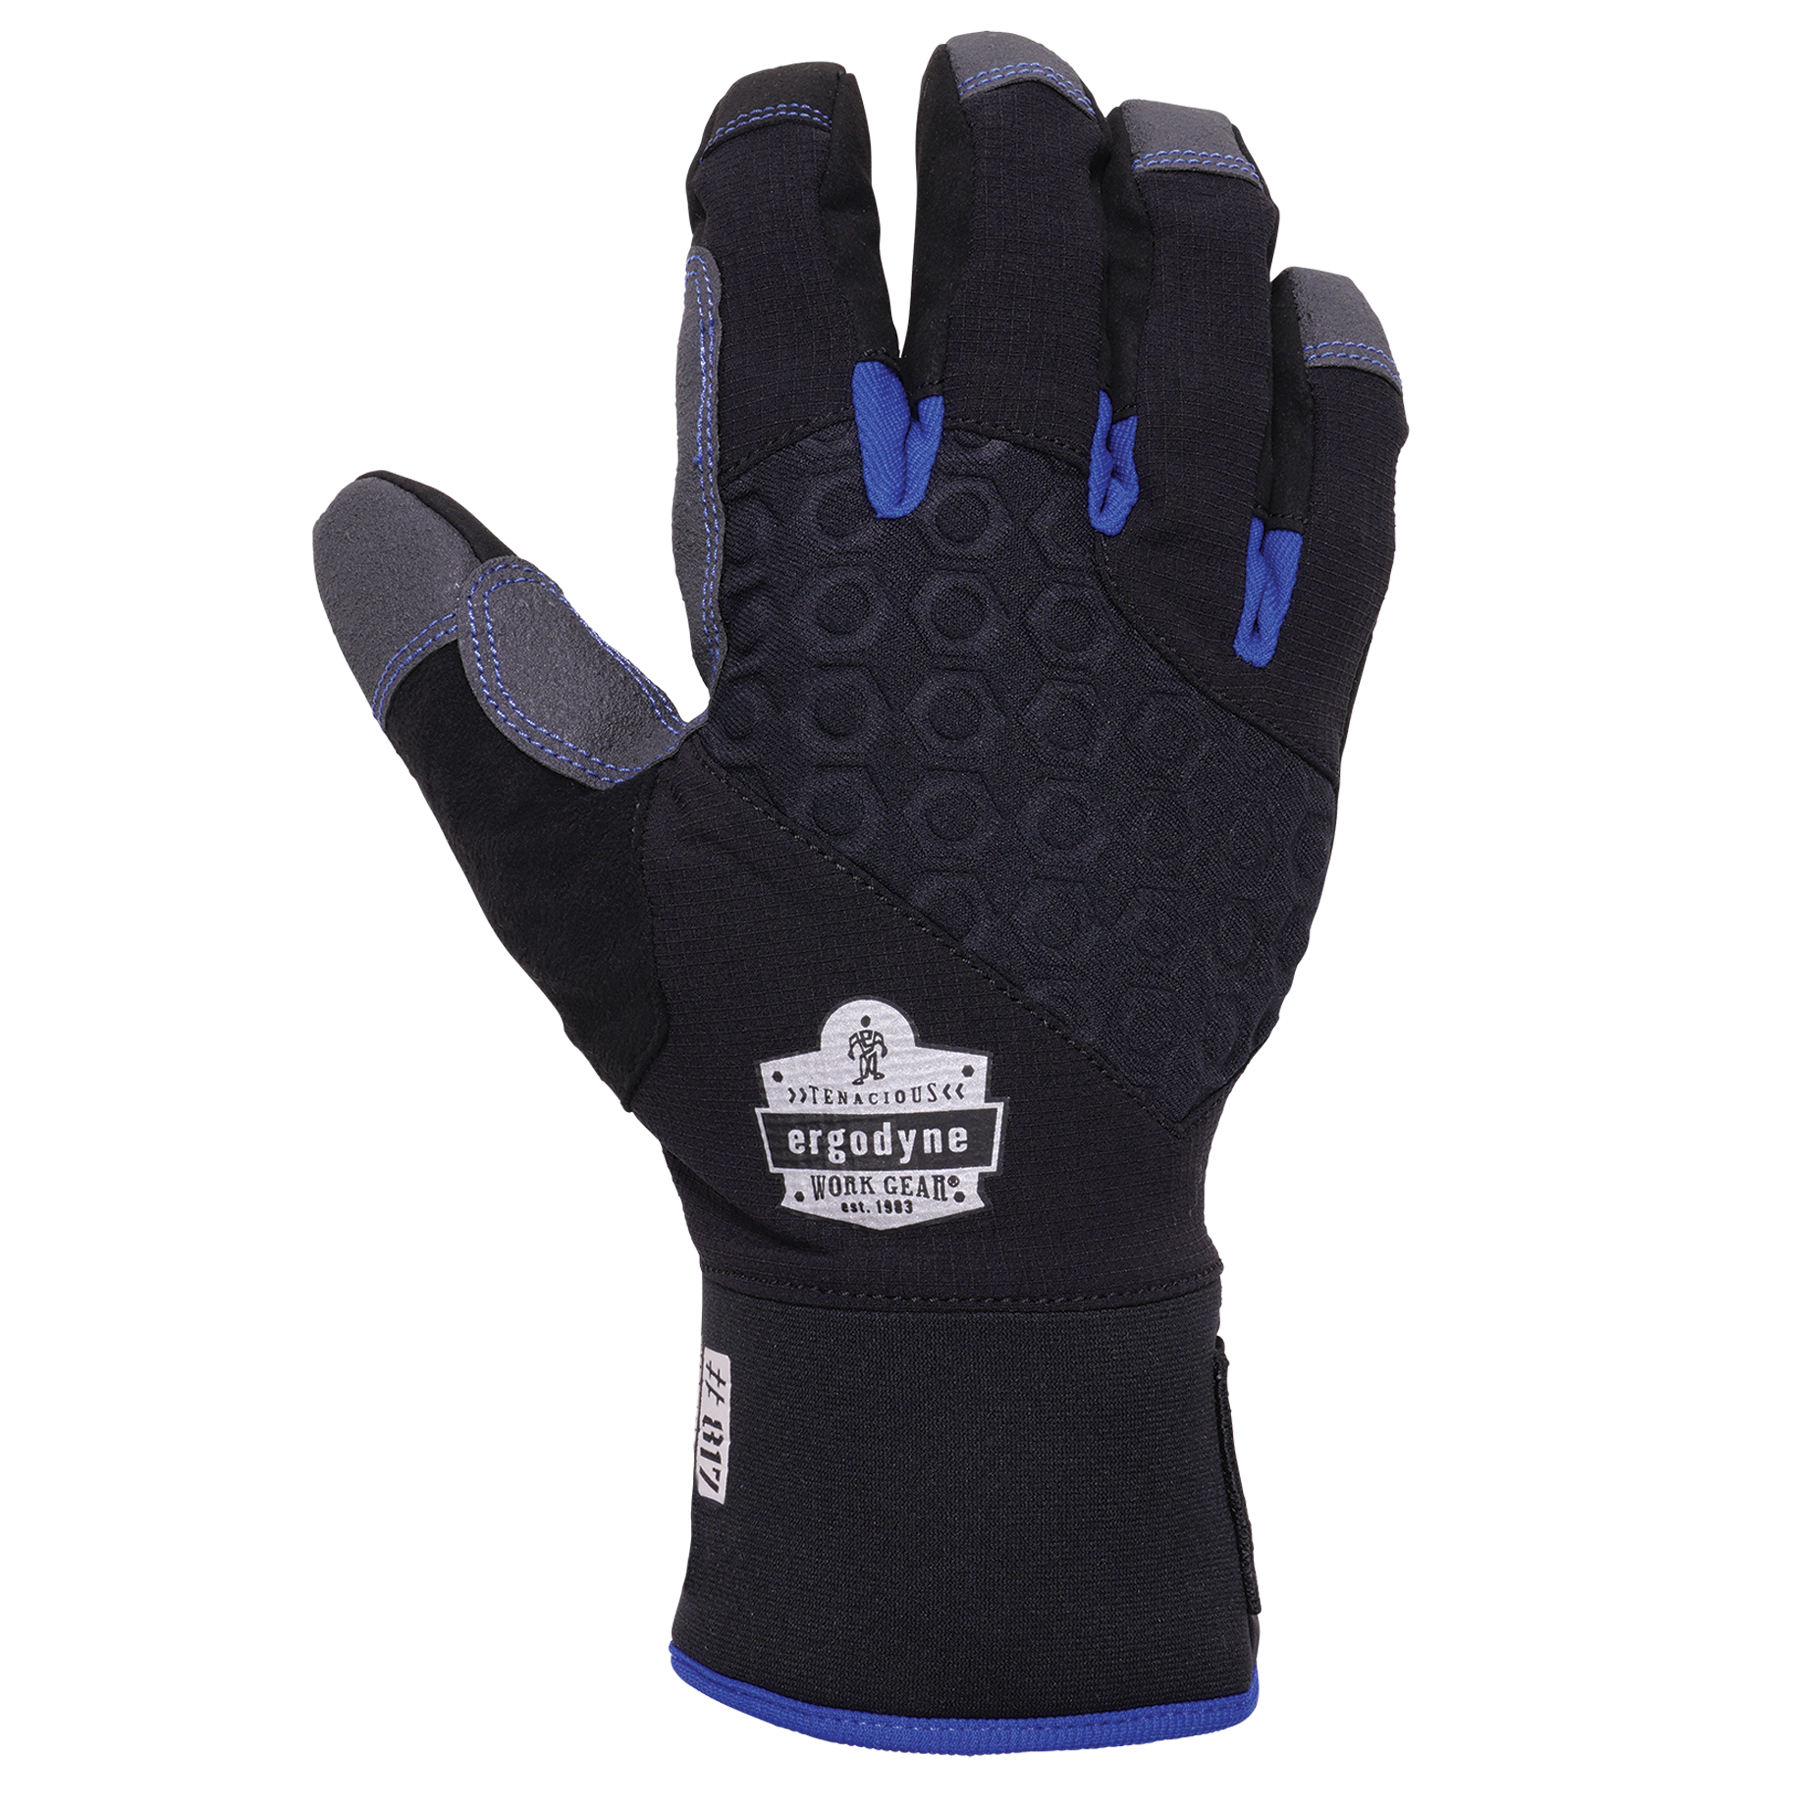 Thermal Gloves Utility Reinforced | Ergodyne